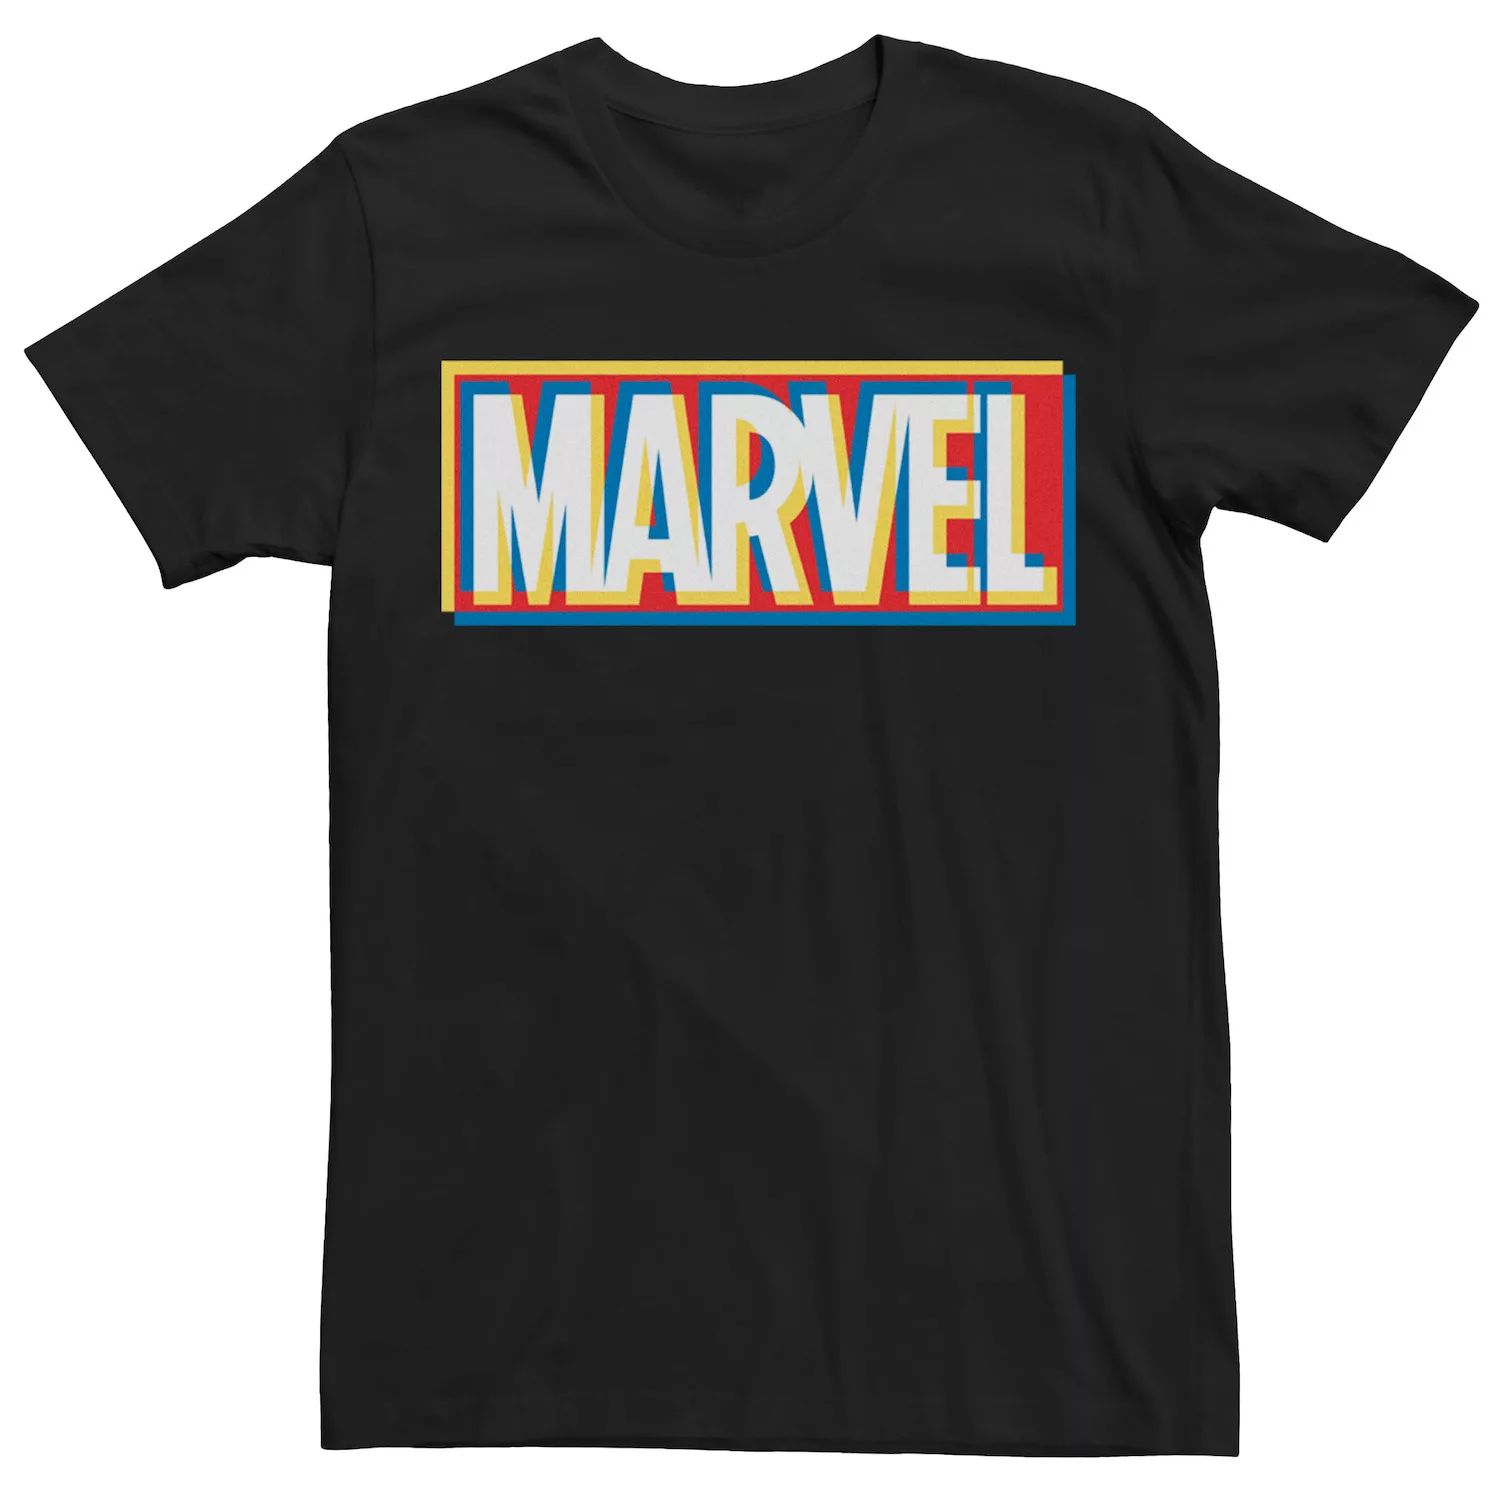 Мужская футболка с графическим логотипом Marvel Trippy